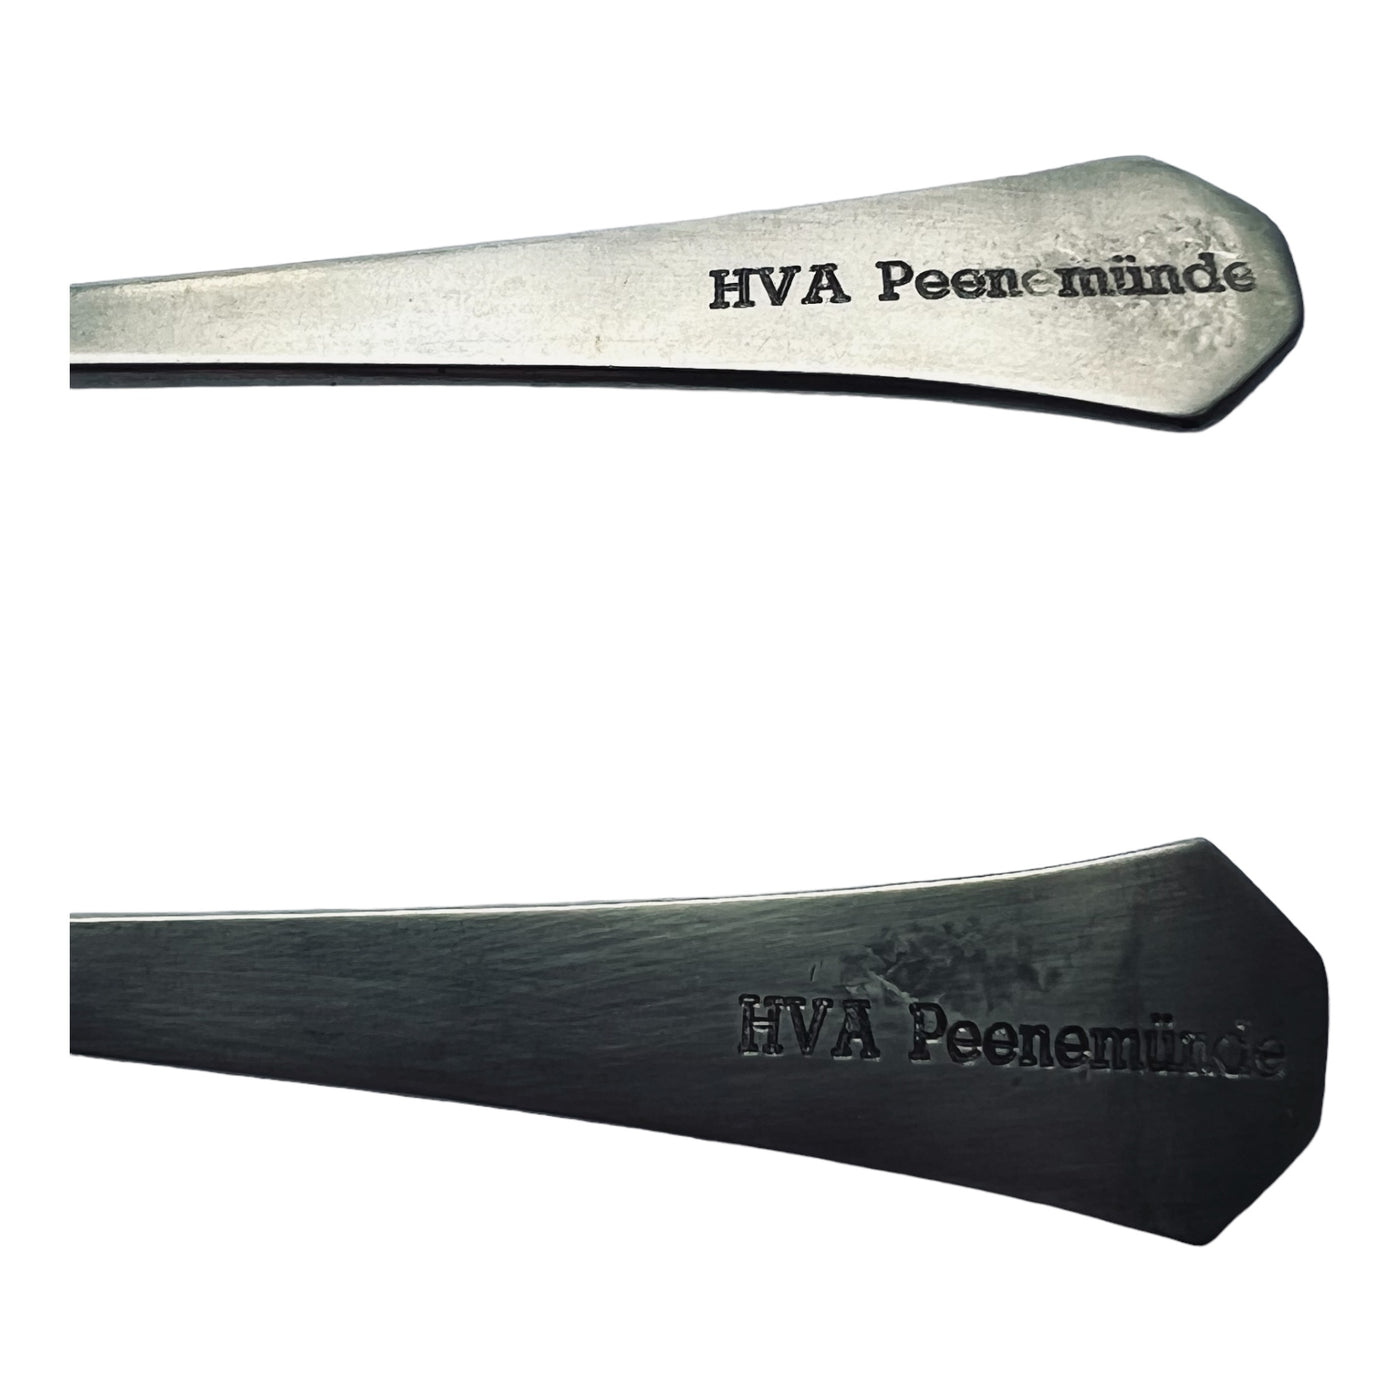 HVA Peenemunde – vintage utencils